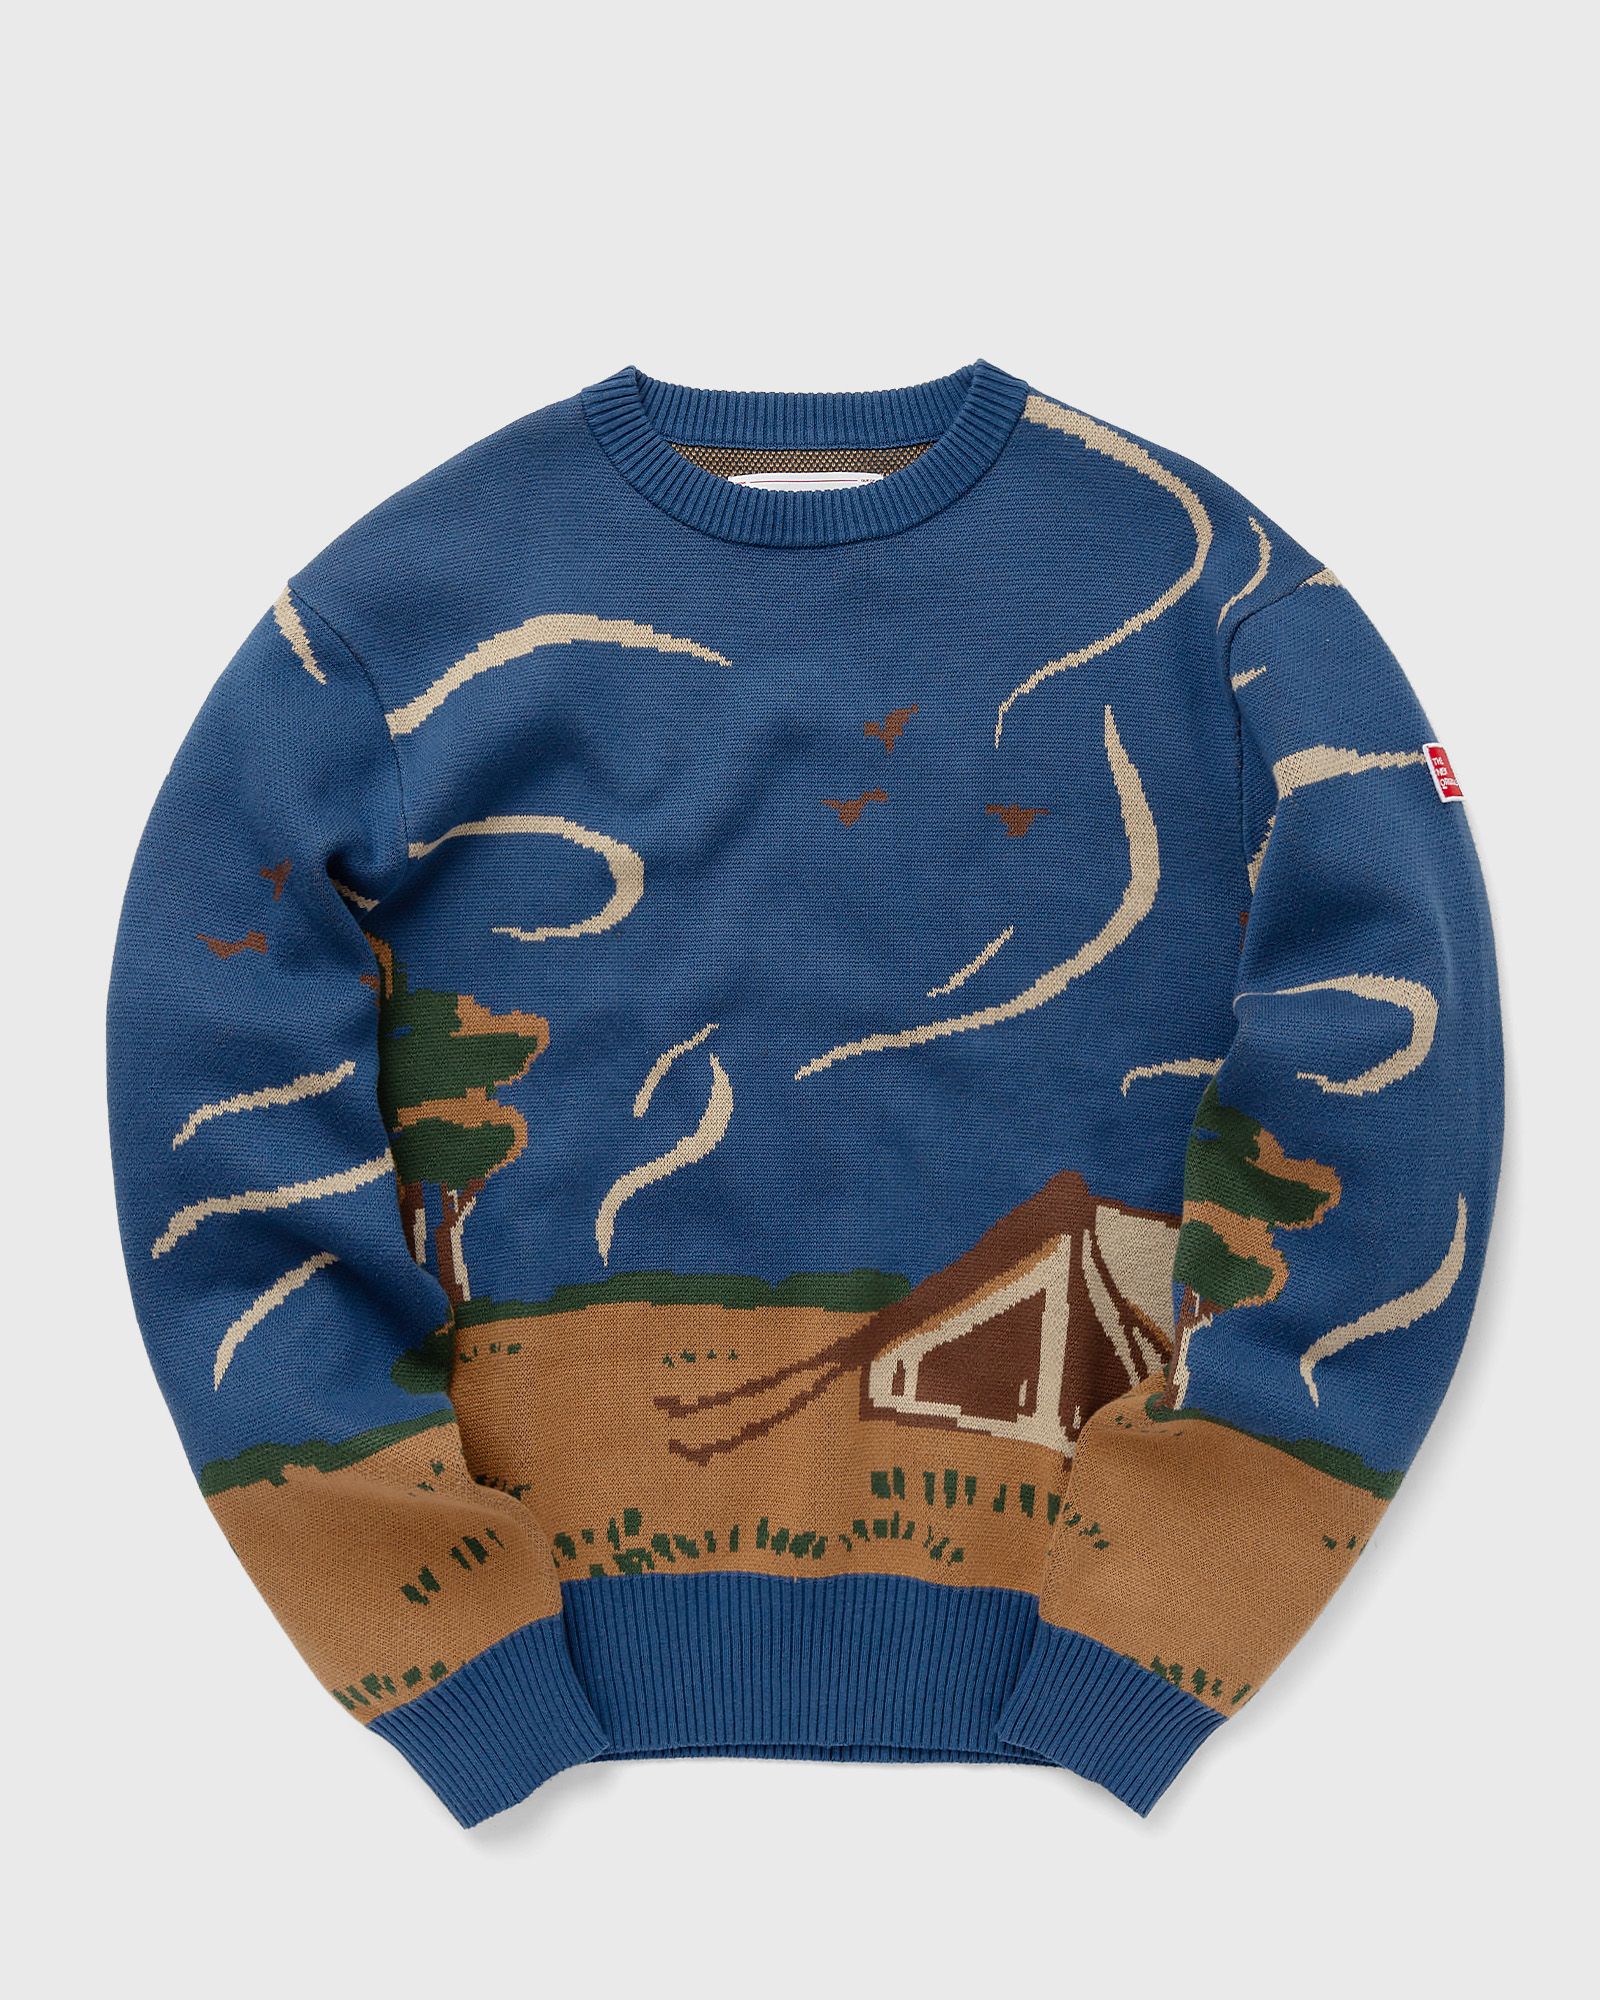 The New Originals - camping knit crewneck men pullovers blue|brown in größe:l